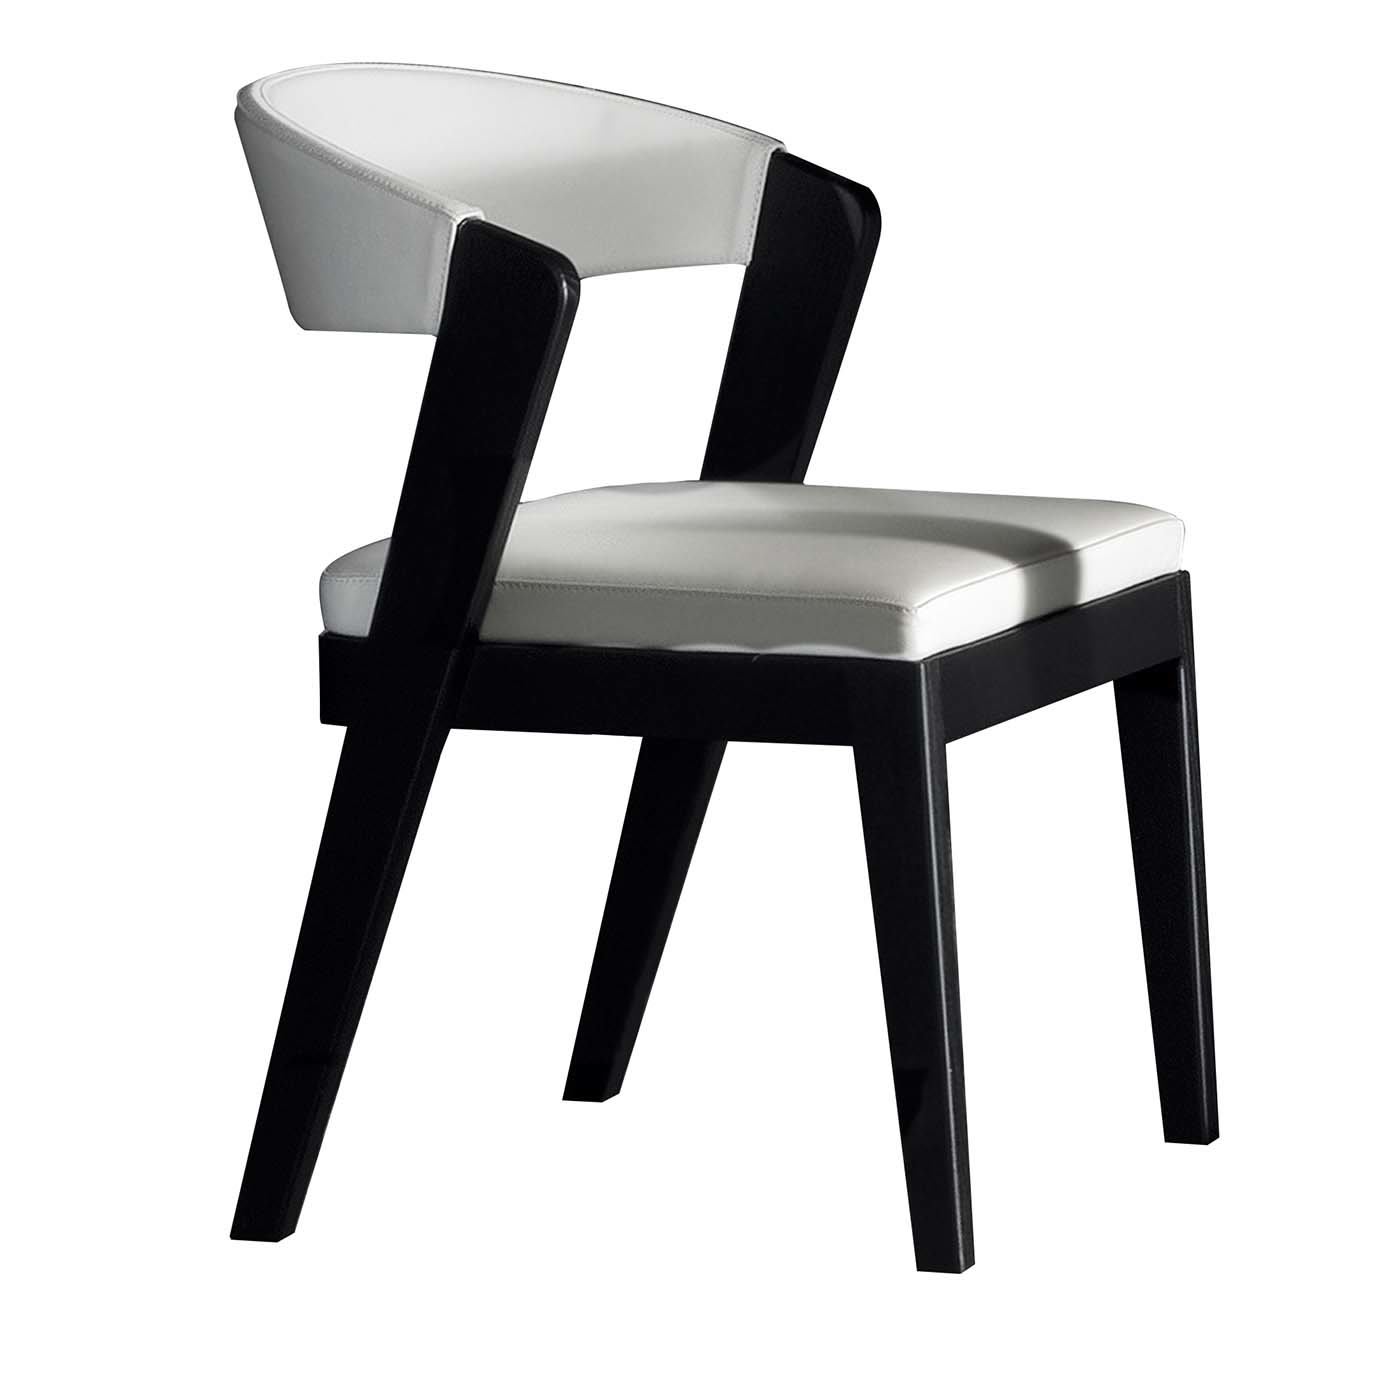 Giudecca Chair - Meroni & Colzani